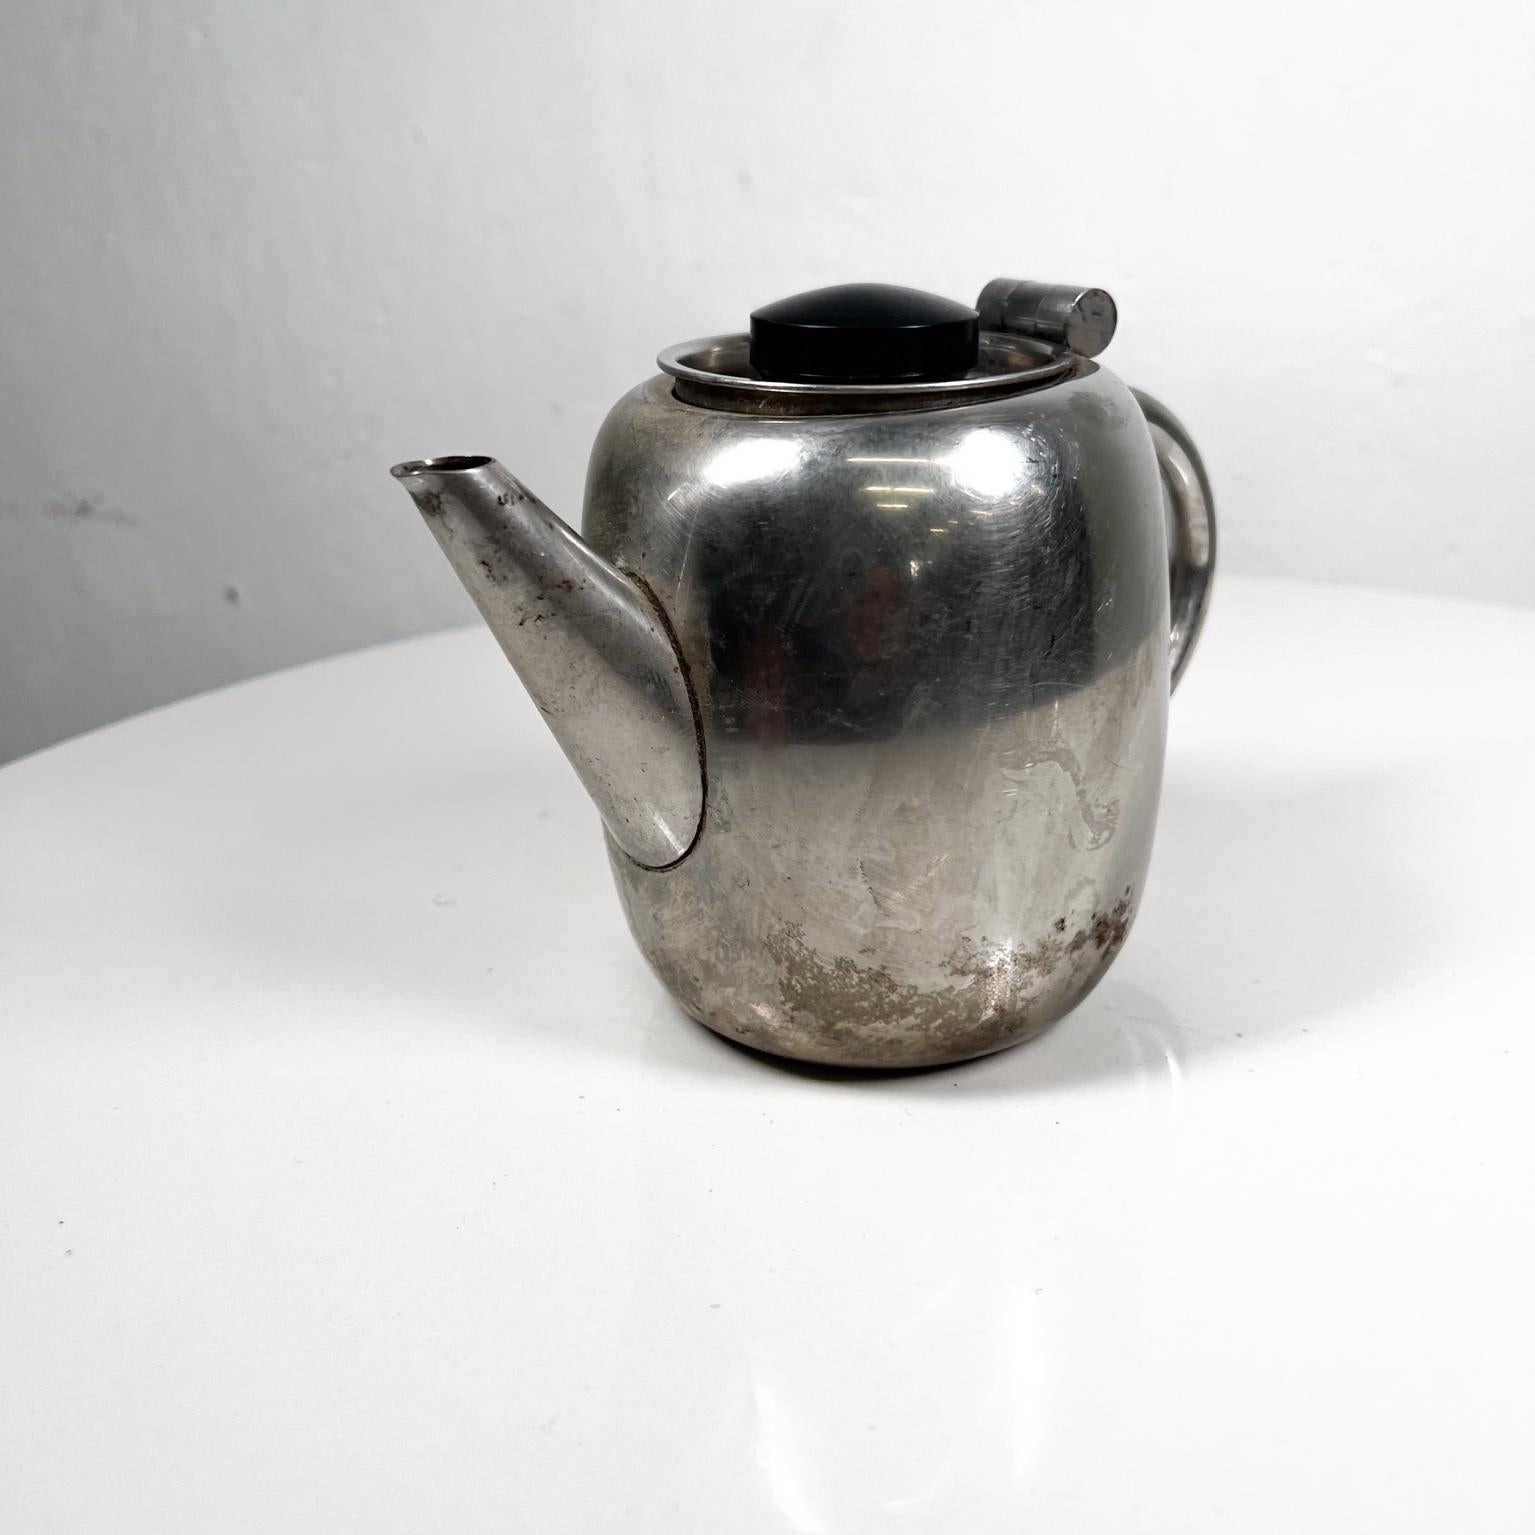 20th Century 1950s Vintage Art Deco Stylish Small Tea Pot Stainless Steel